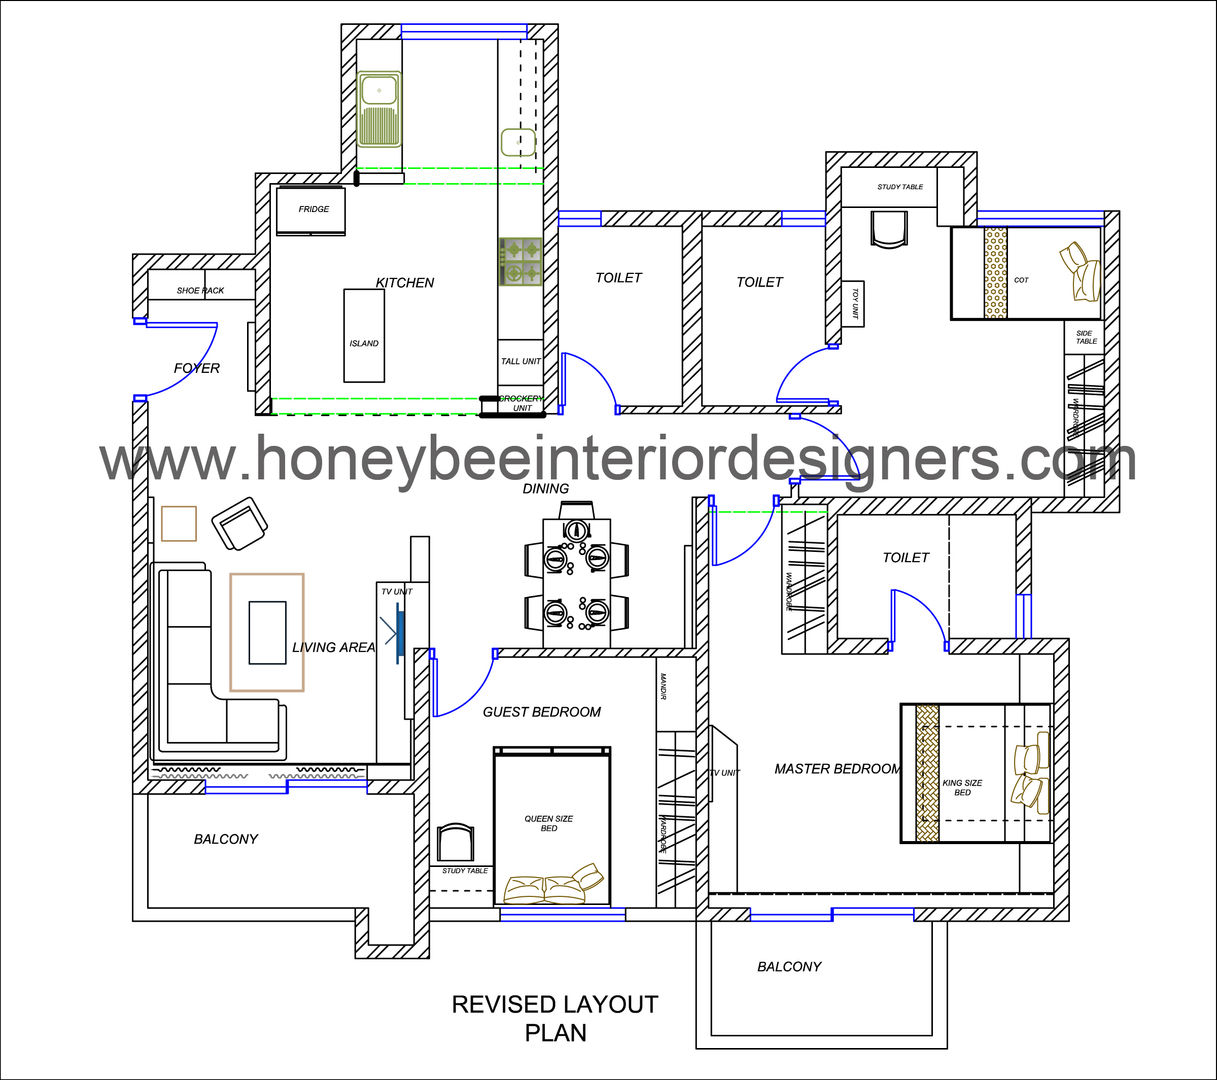 Layout by Honeybee Interior Designers Honeybee Interior Designers